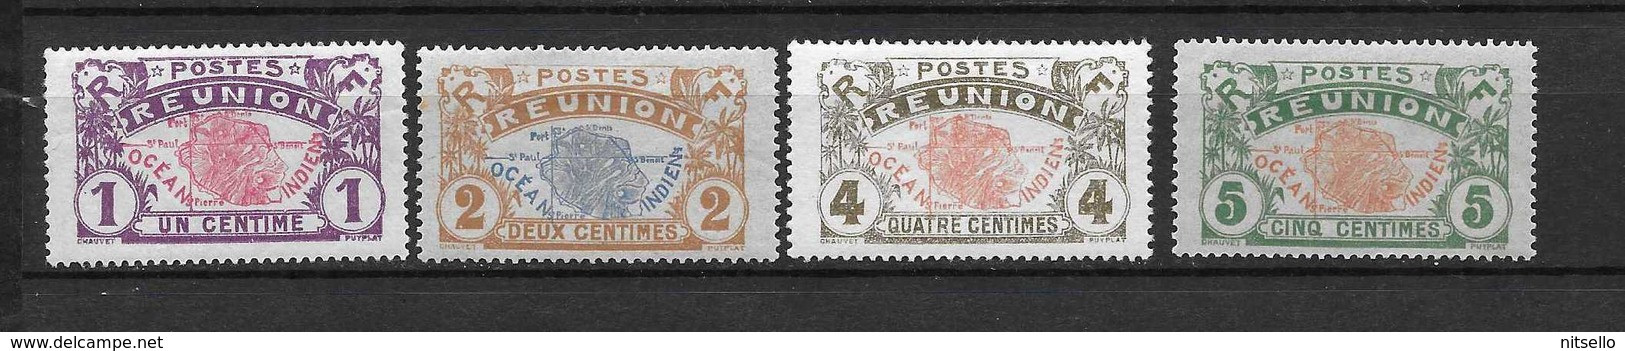 LOTE 1816  ///  REUNION    ¡¡¡¡ LIQUIDATION !!!! - Unused Stamps